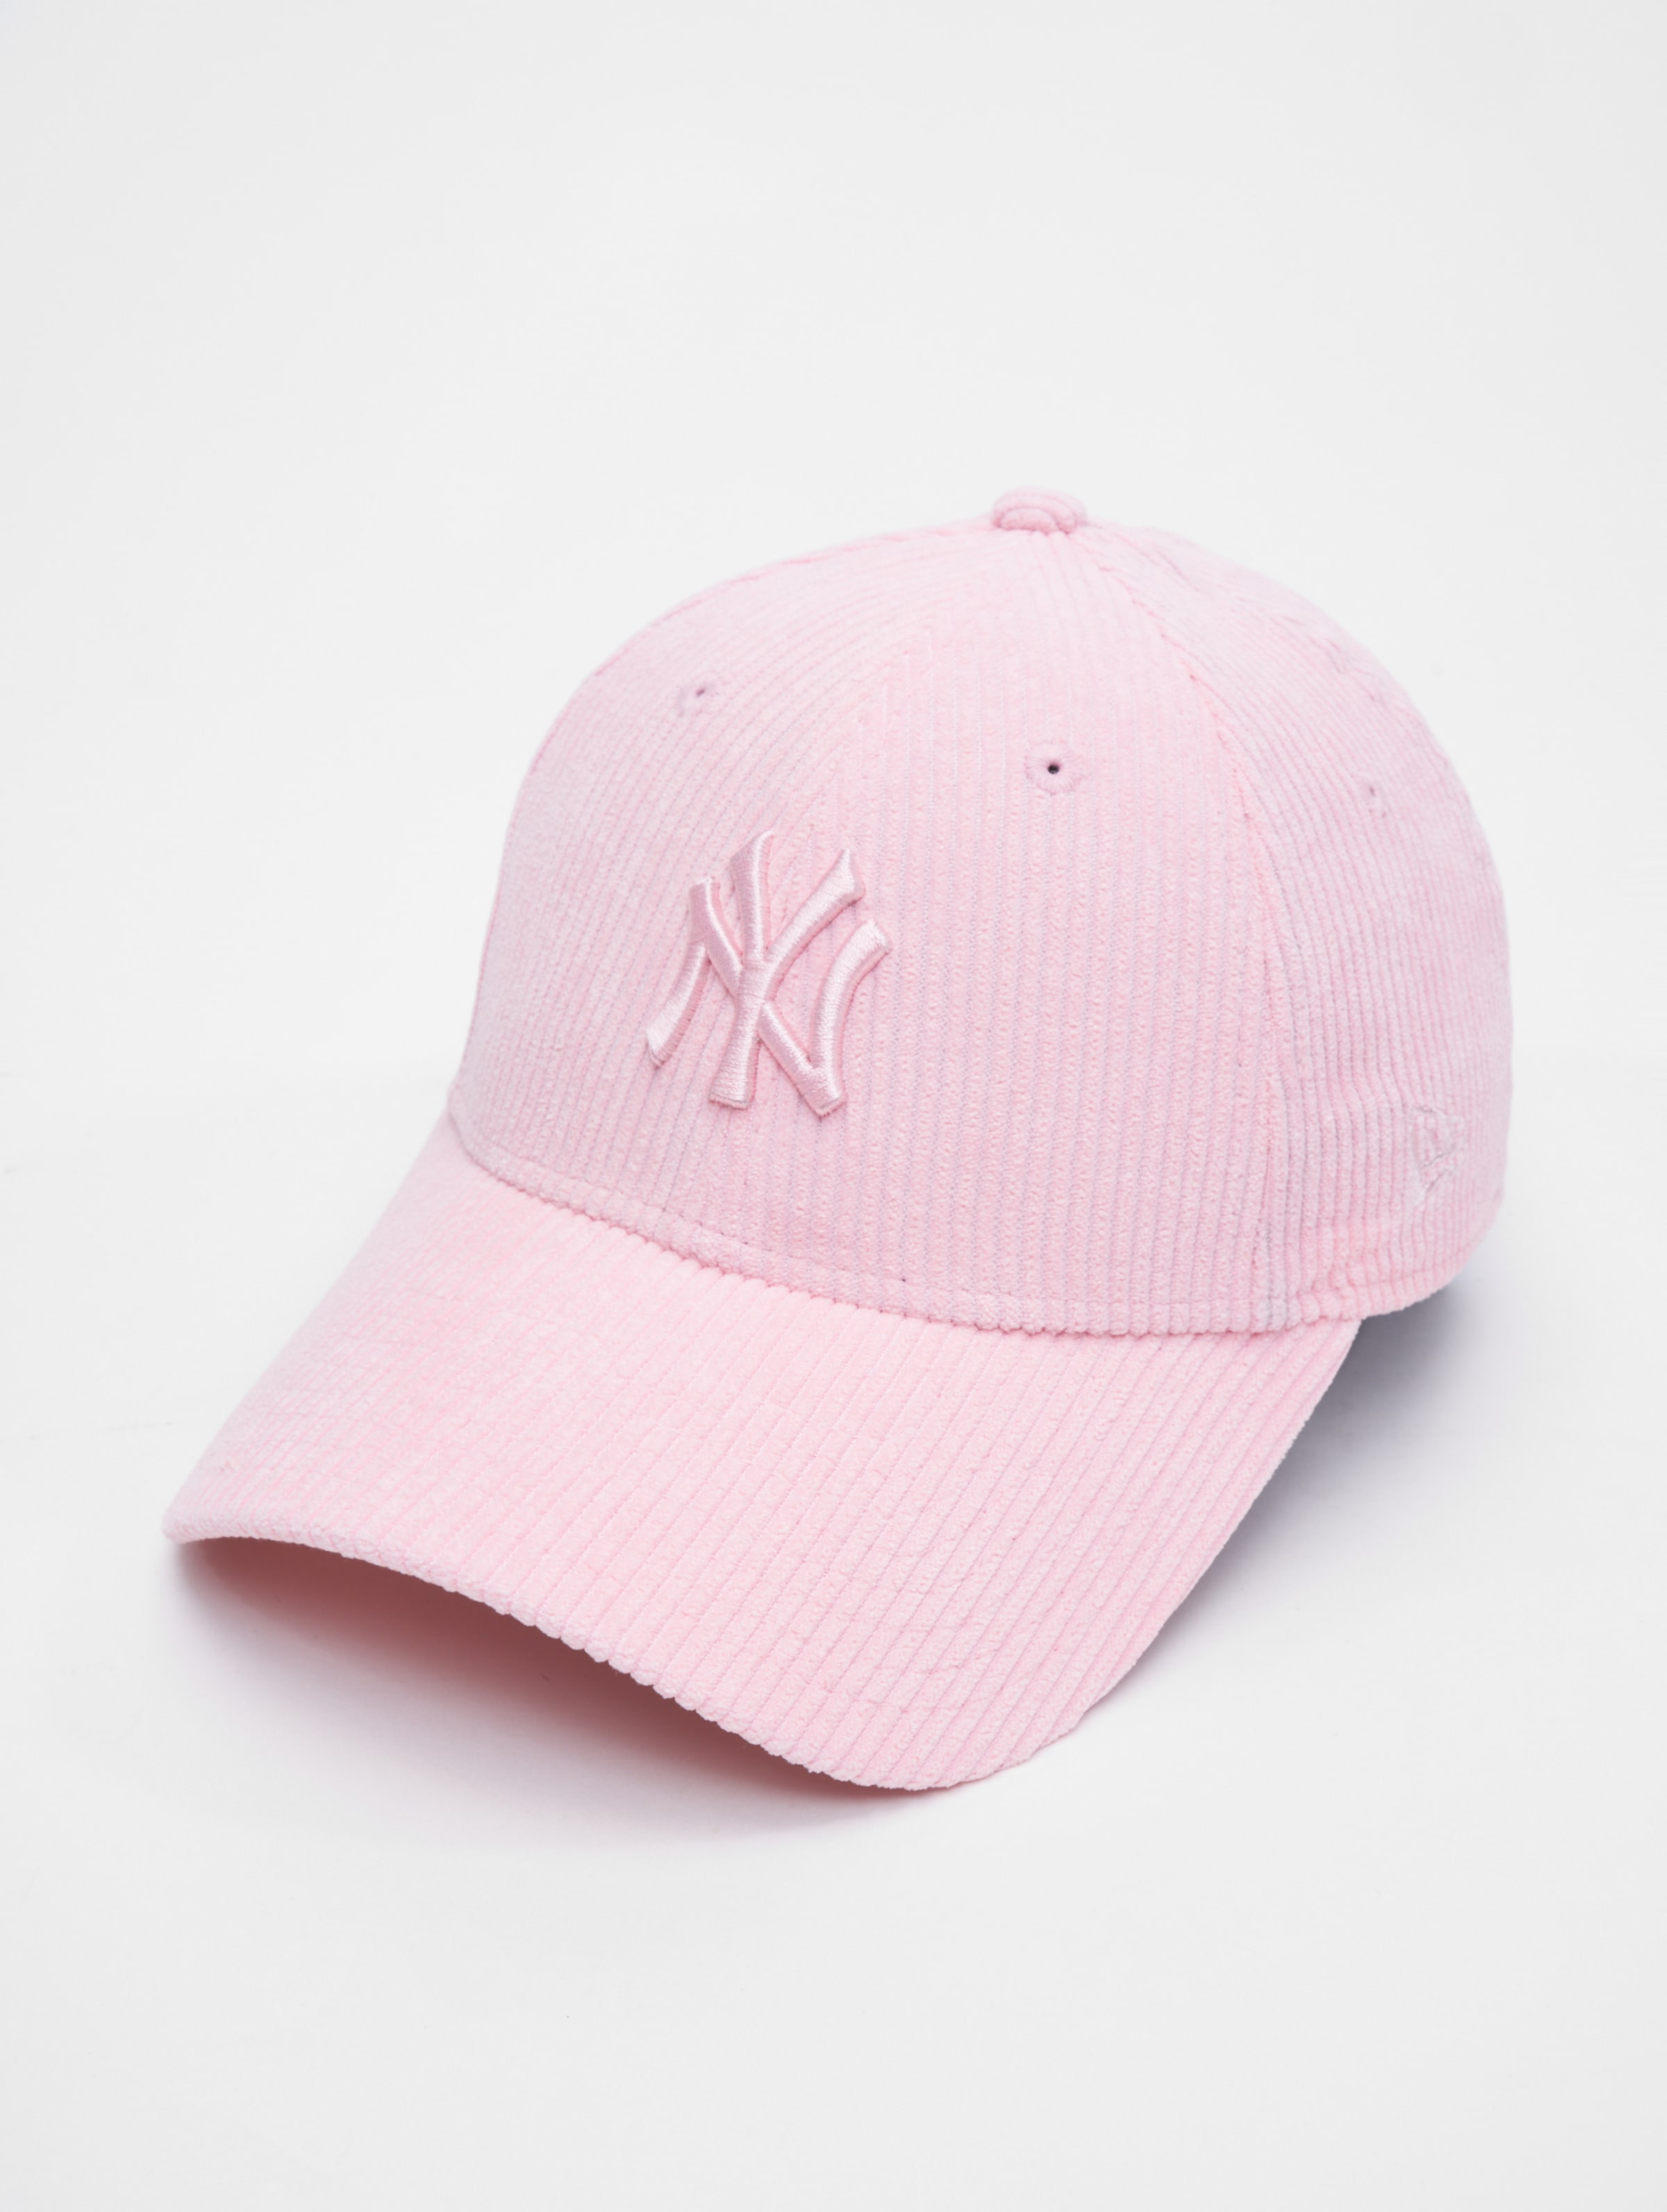 New Era New York Yankees Womens Summer Cord Pink 9FORTY Adjustable Cap